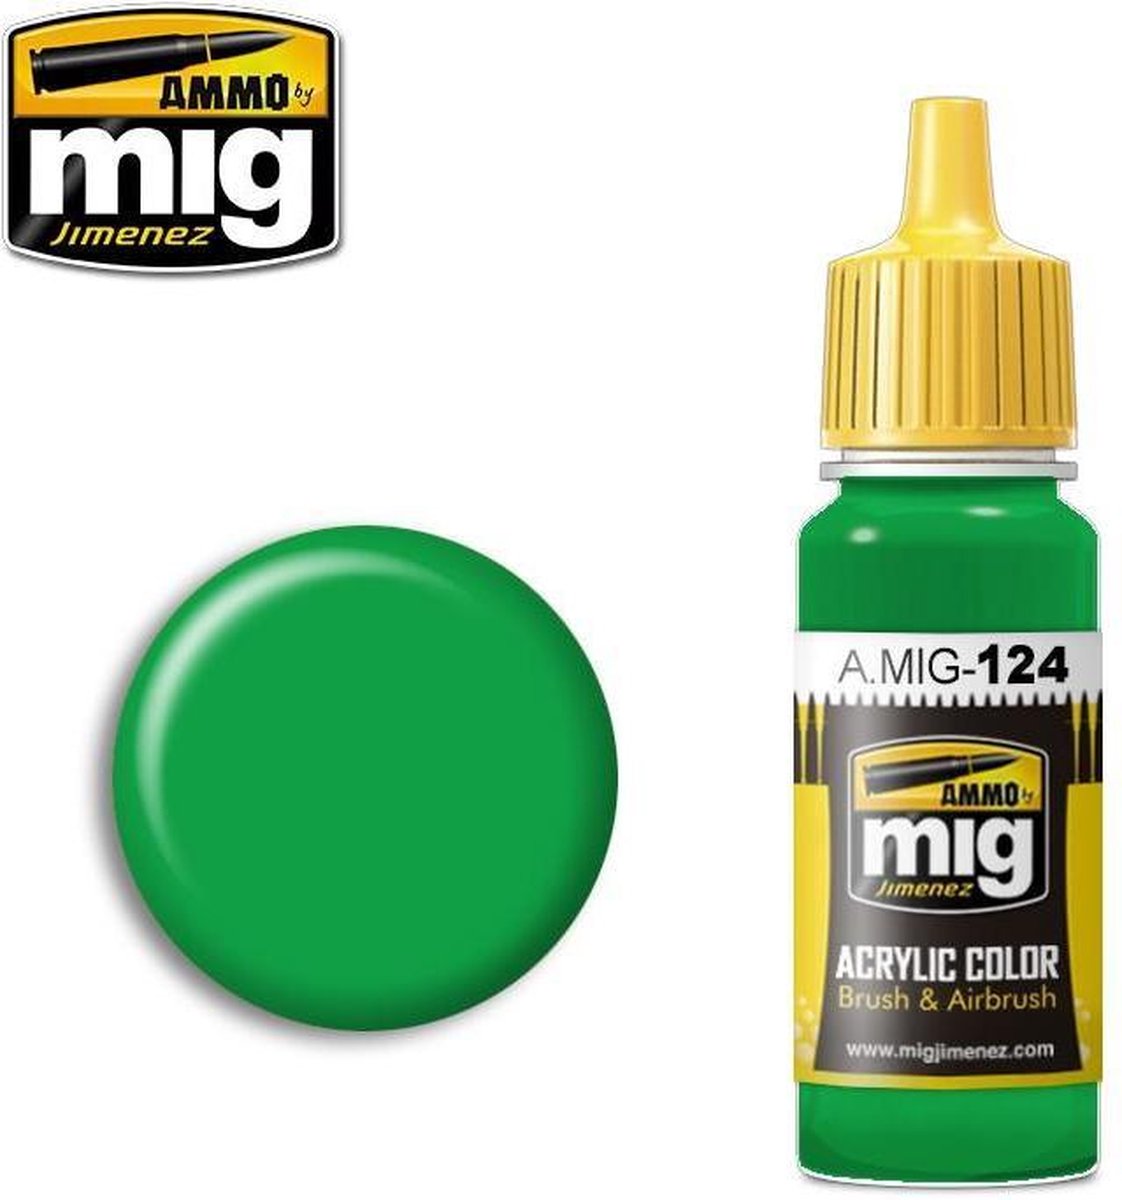 AMMO MIG 0124 Lime Green - Acryl Verf flesje